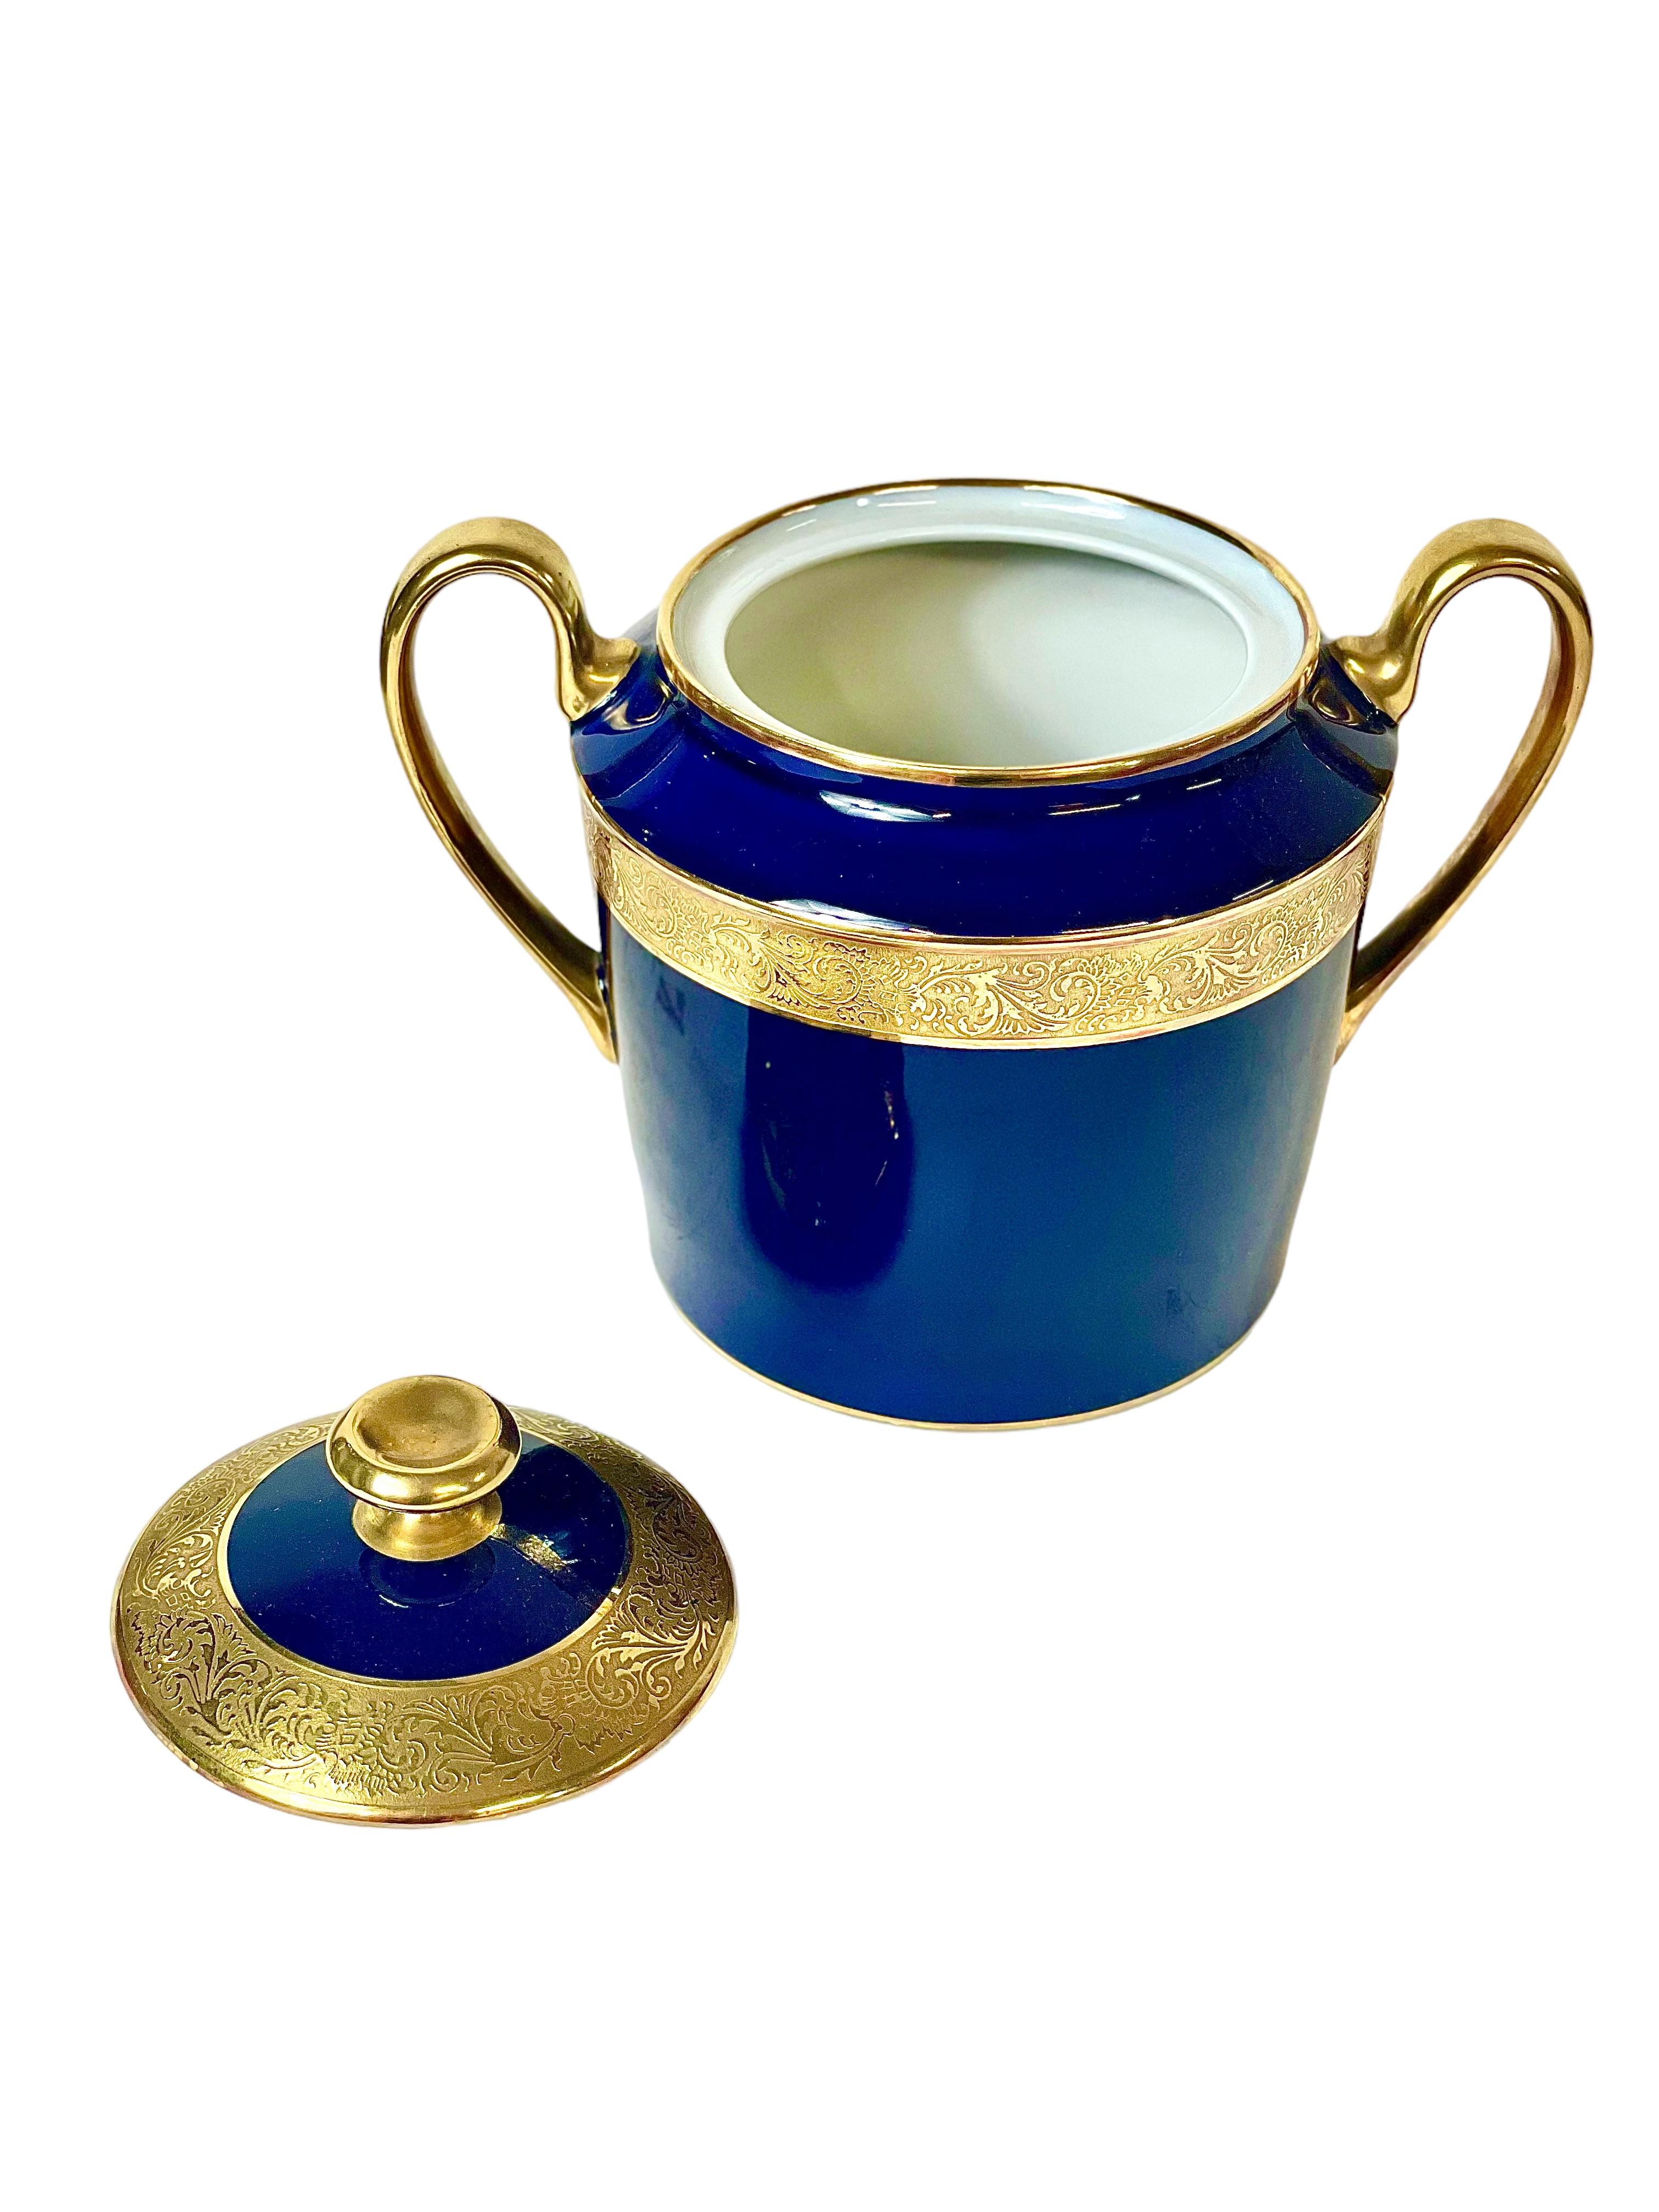 Limoges Porcelain Service Glazed in an Opulent Royal Blue with Gilt Edges In Good Condition For Sale In LA CIOTAT, FR